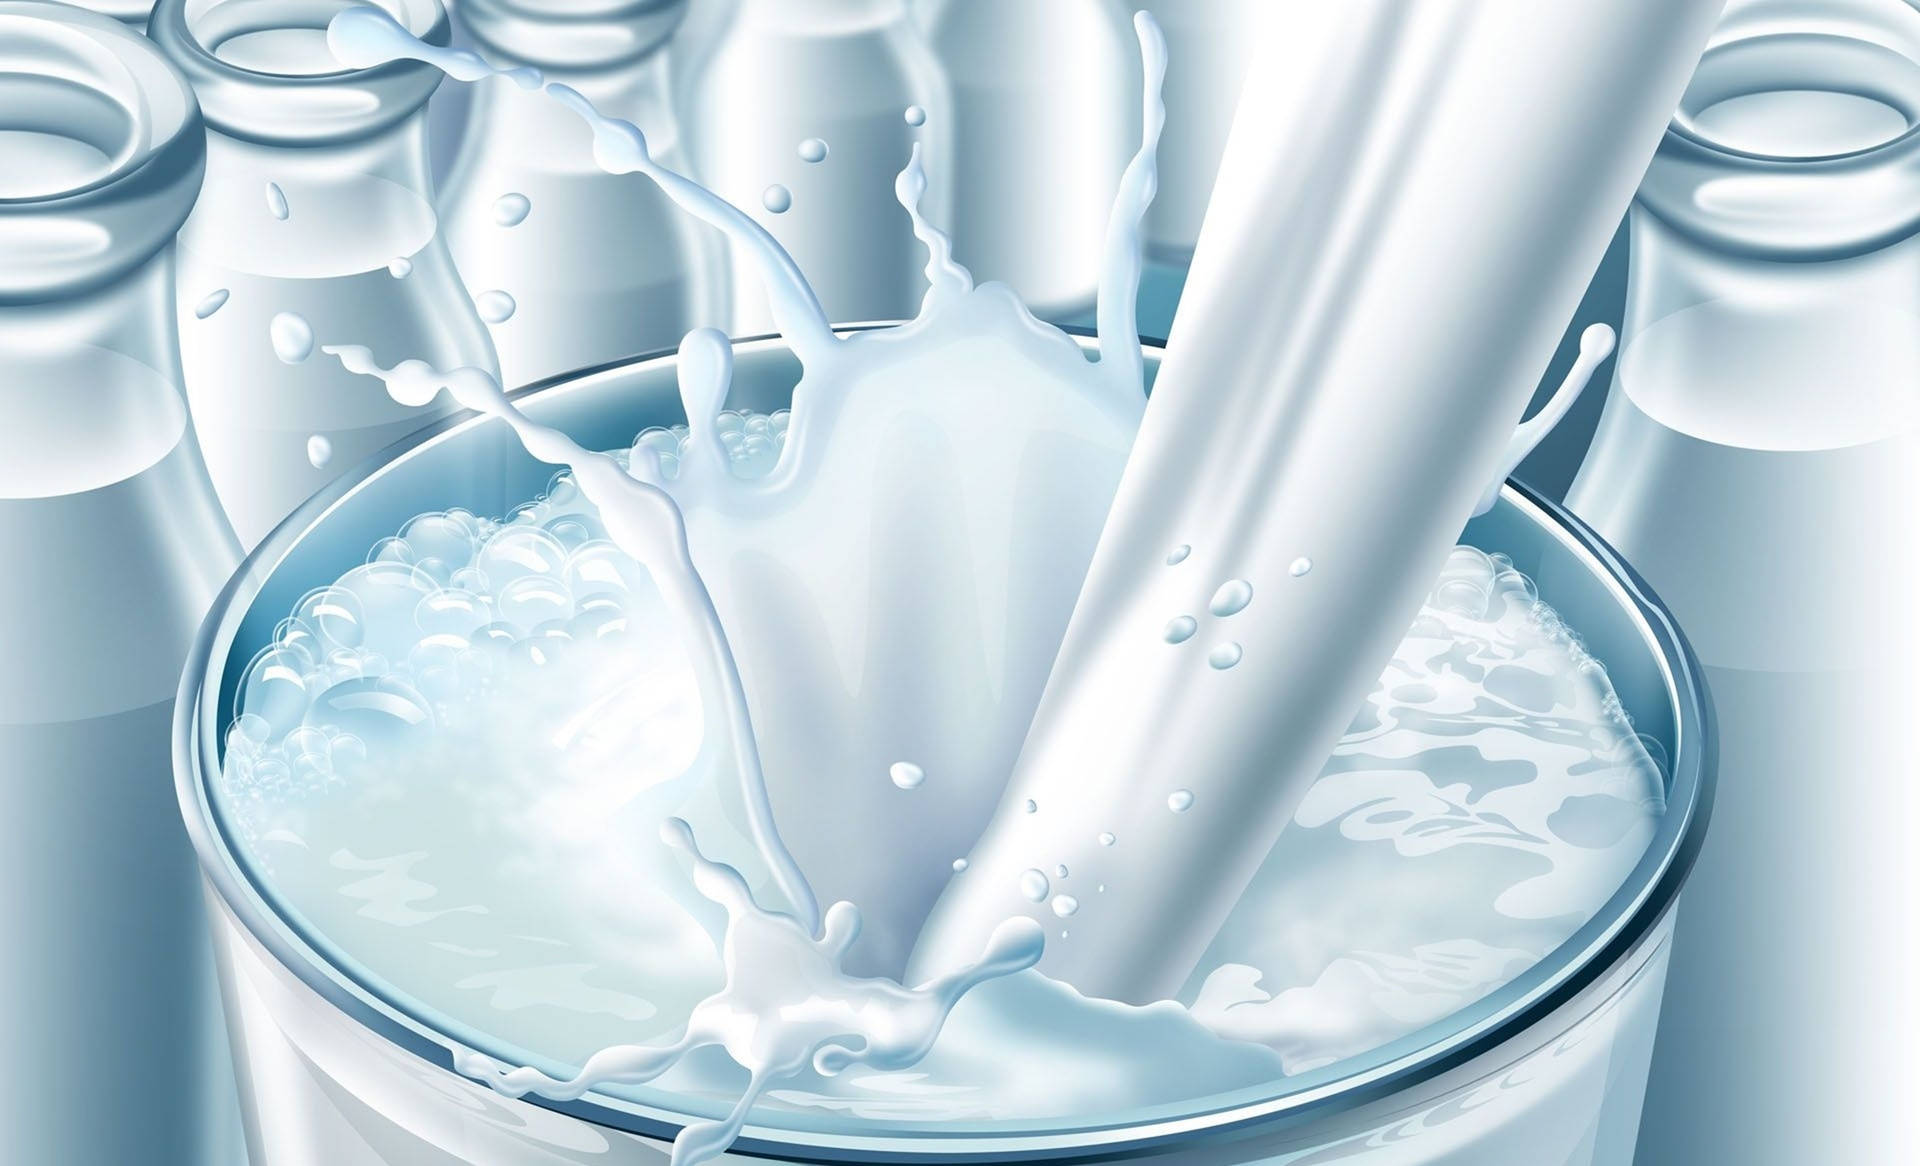 Dairy Milk Liquid And Bottles Artwork Wallpaper